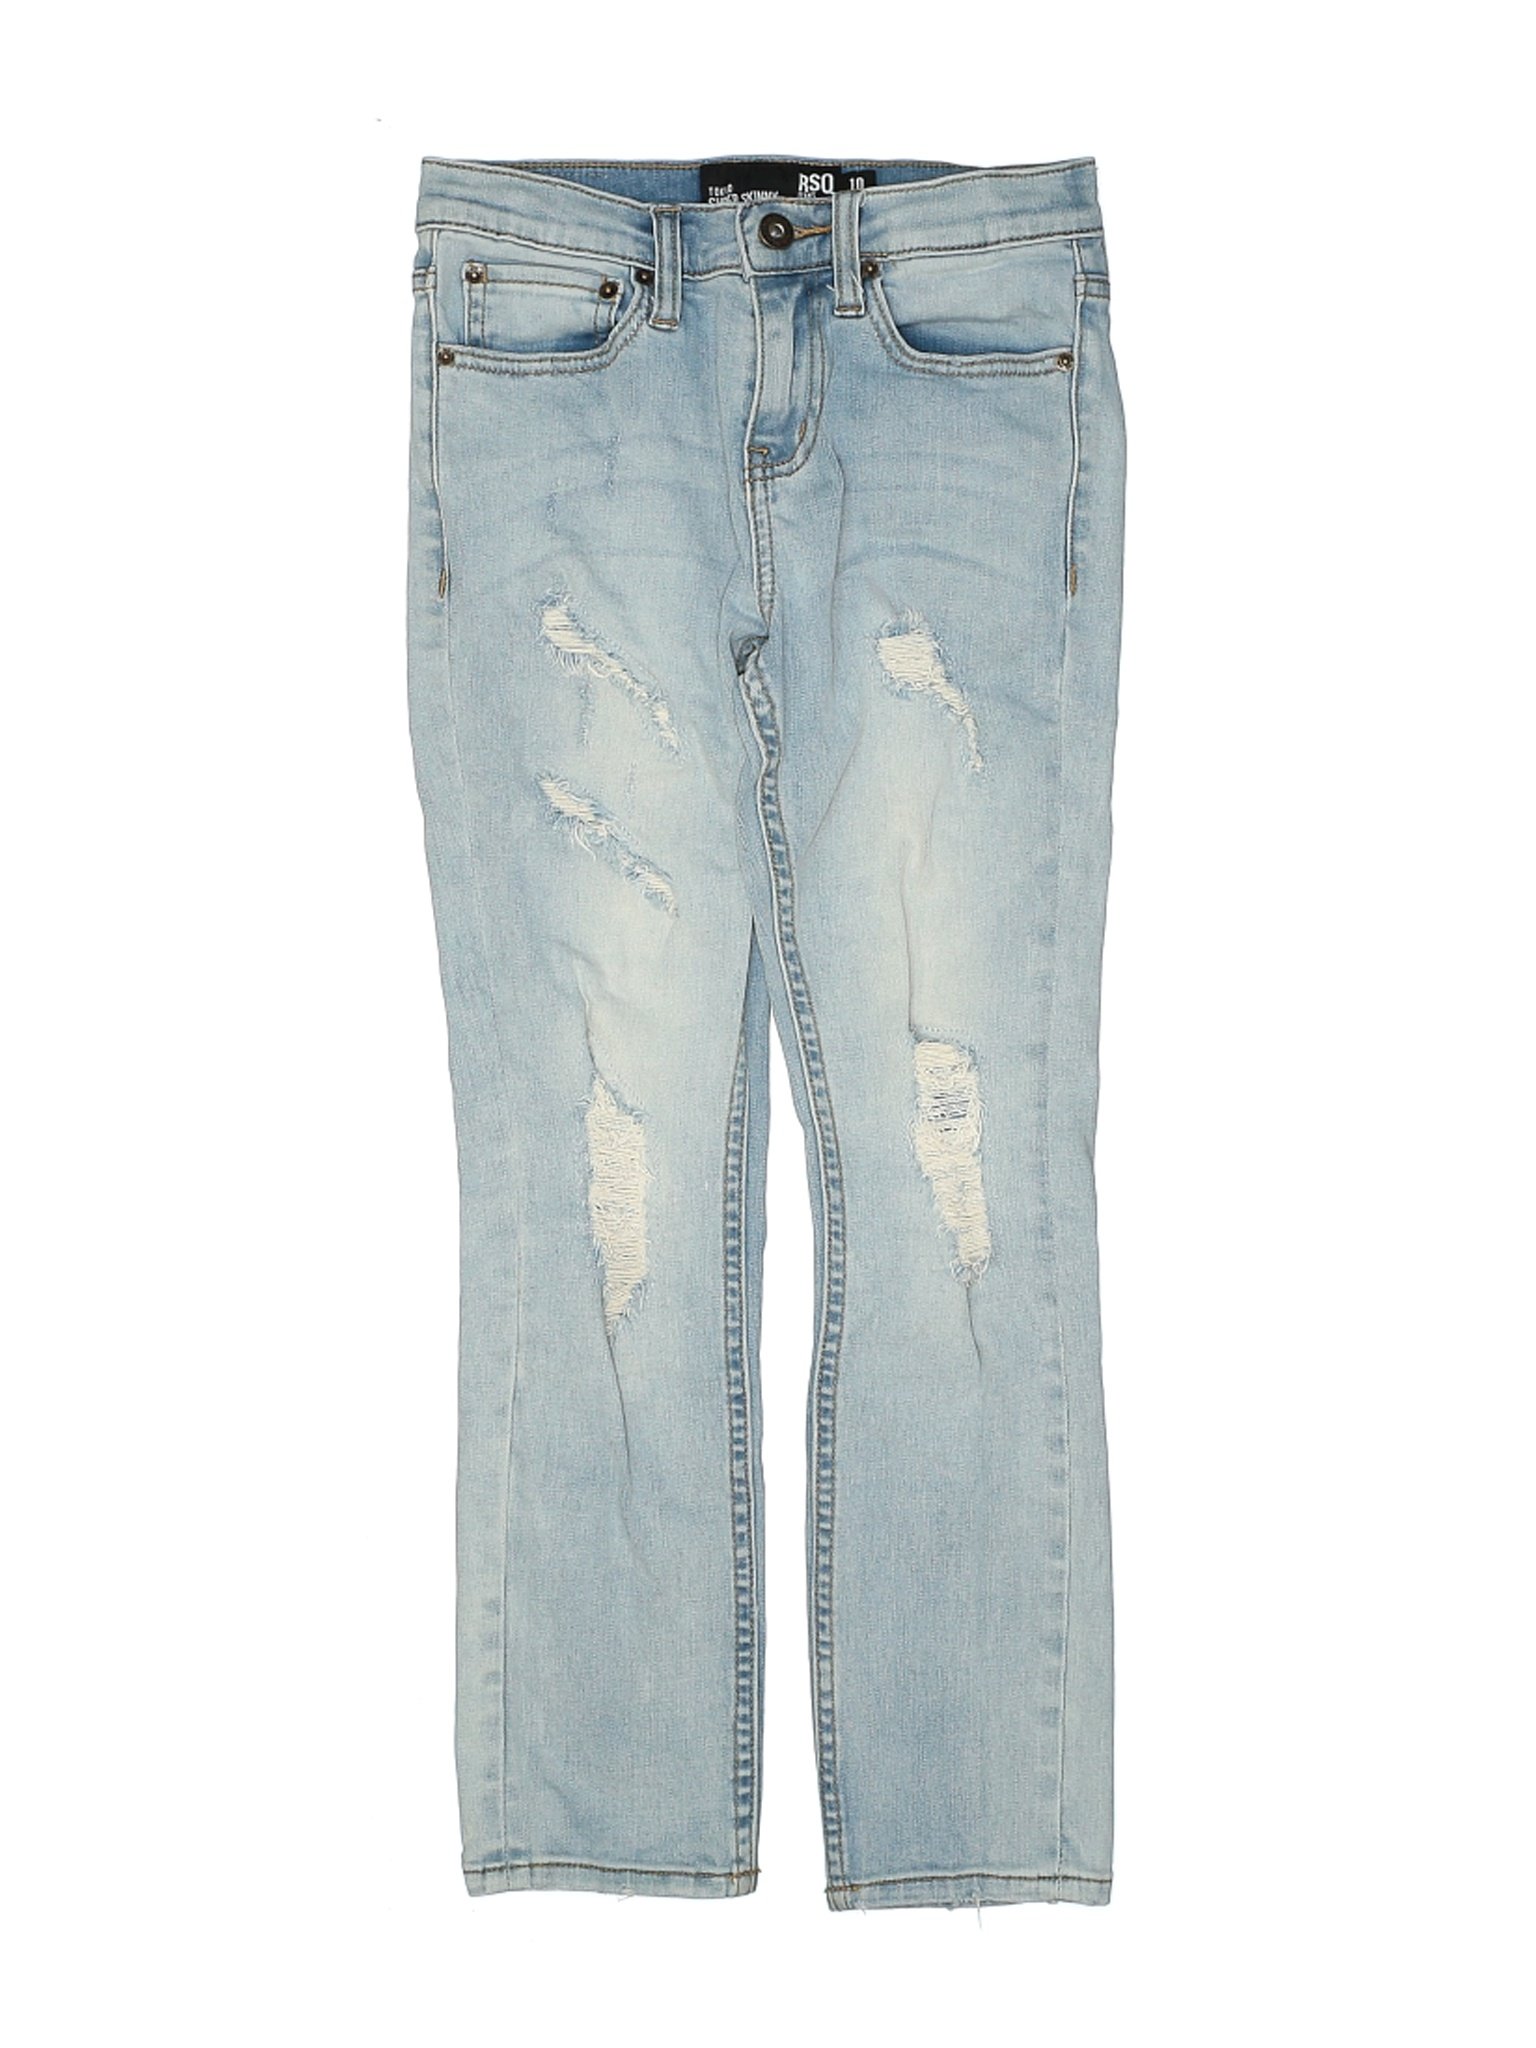 RSQ Girls Blue Jeans 10 | eBay